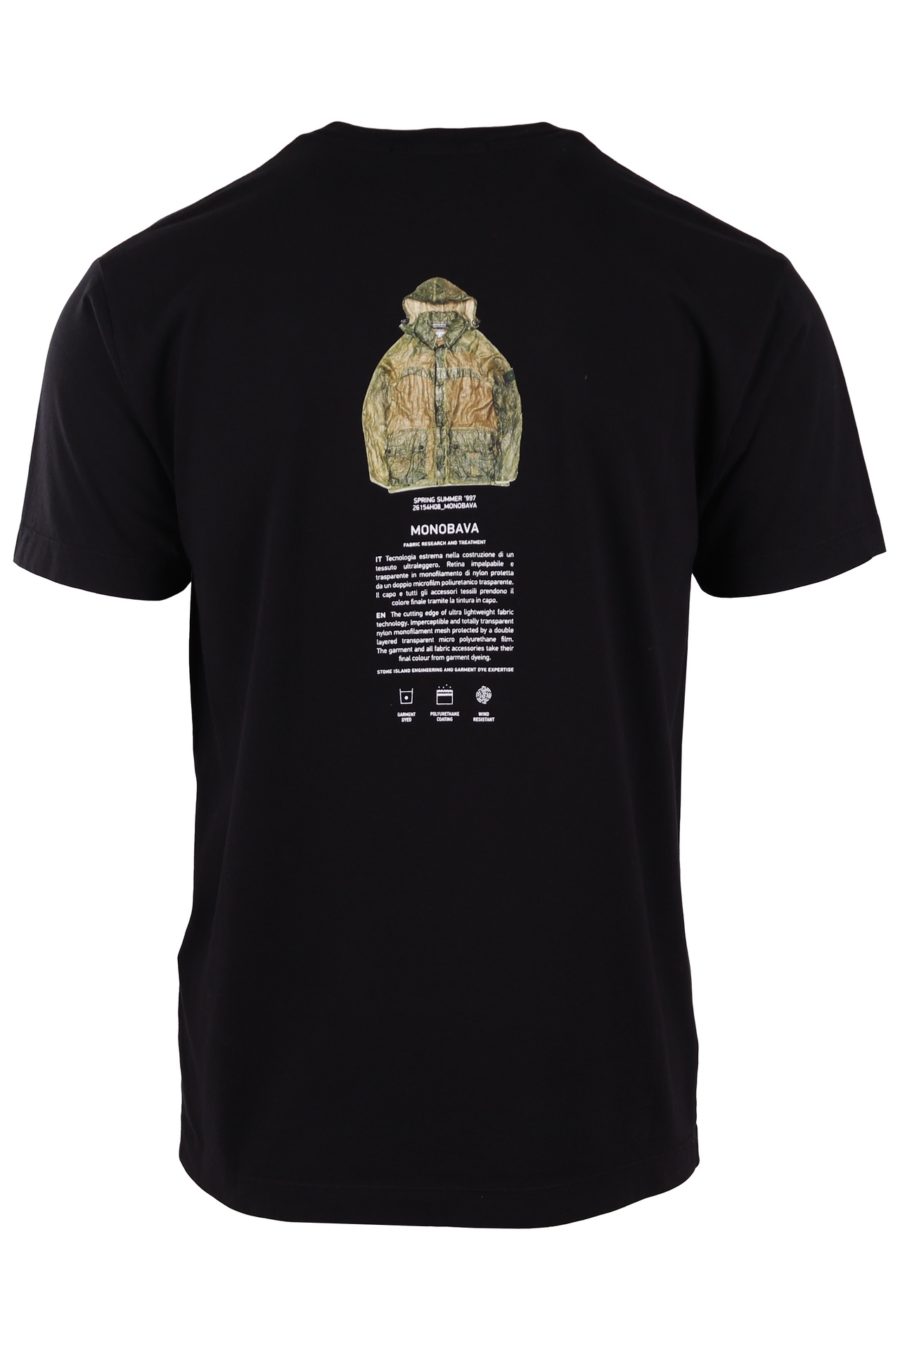 T-shirt Stone Island preta com o logótipo "archivio" - 22d5c84adfa677dabd0422034ff84f27f78f2575